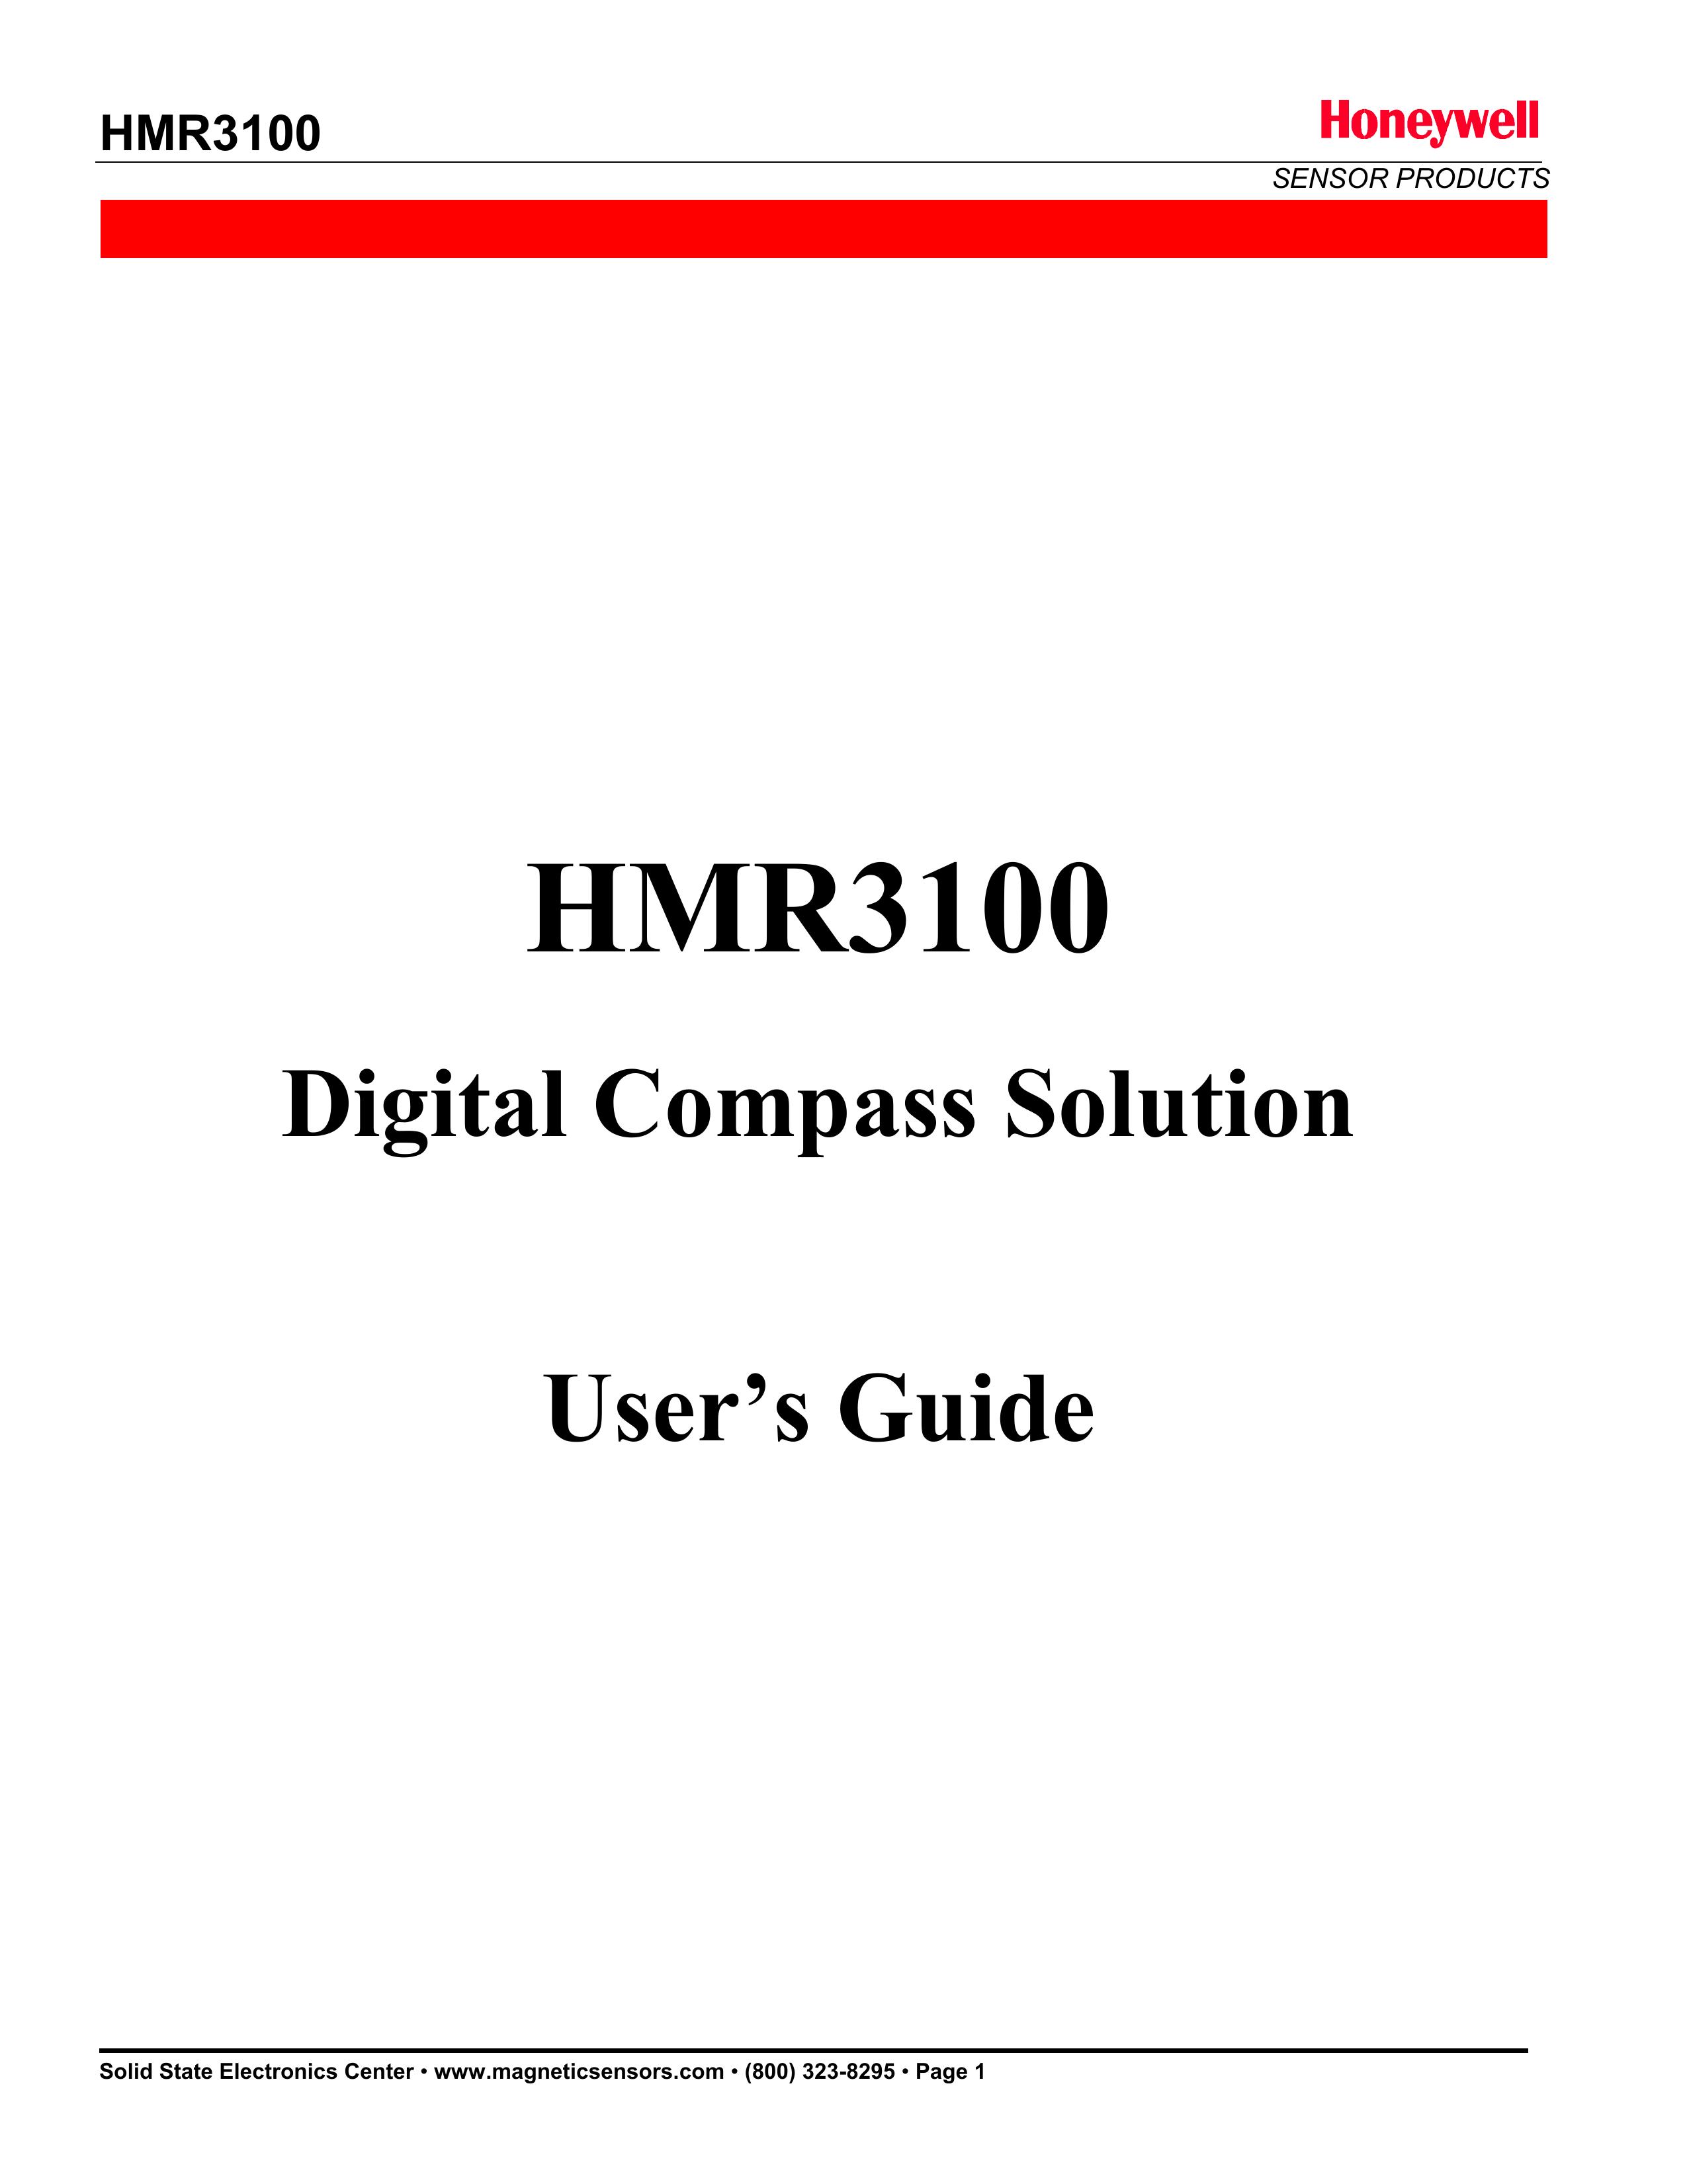 Honeywell HMR3100 Boating Equipment User Manual